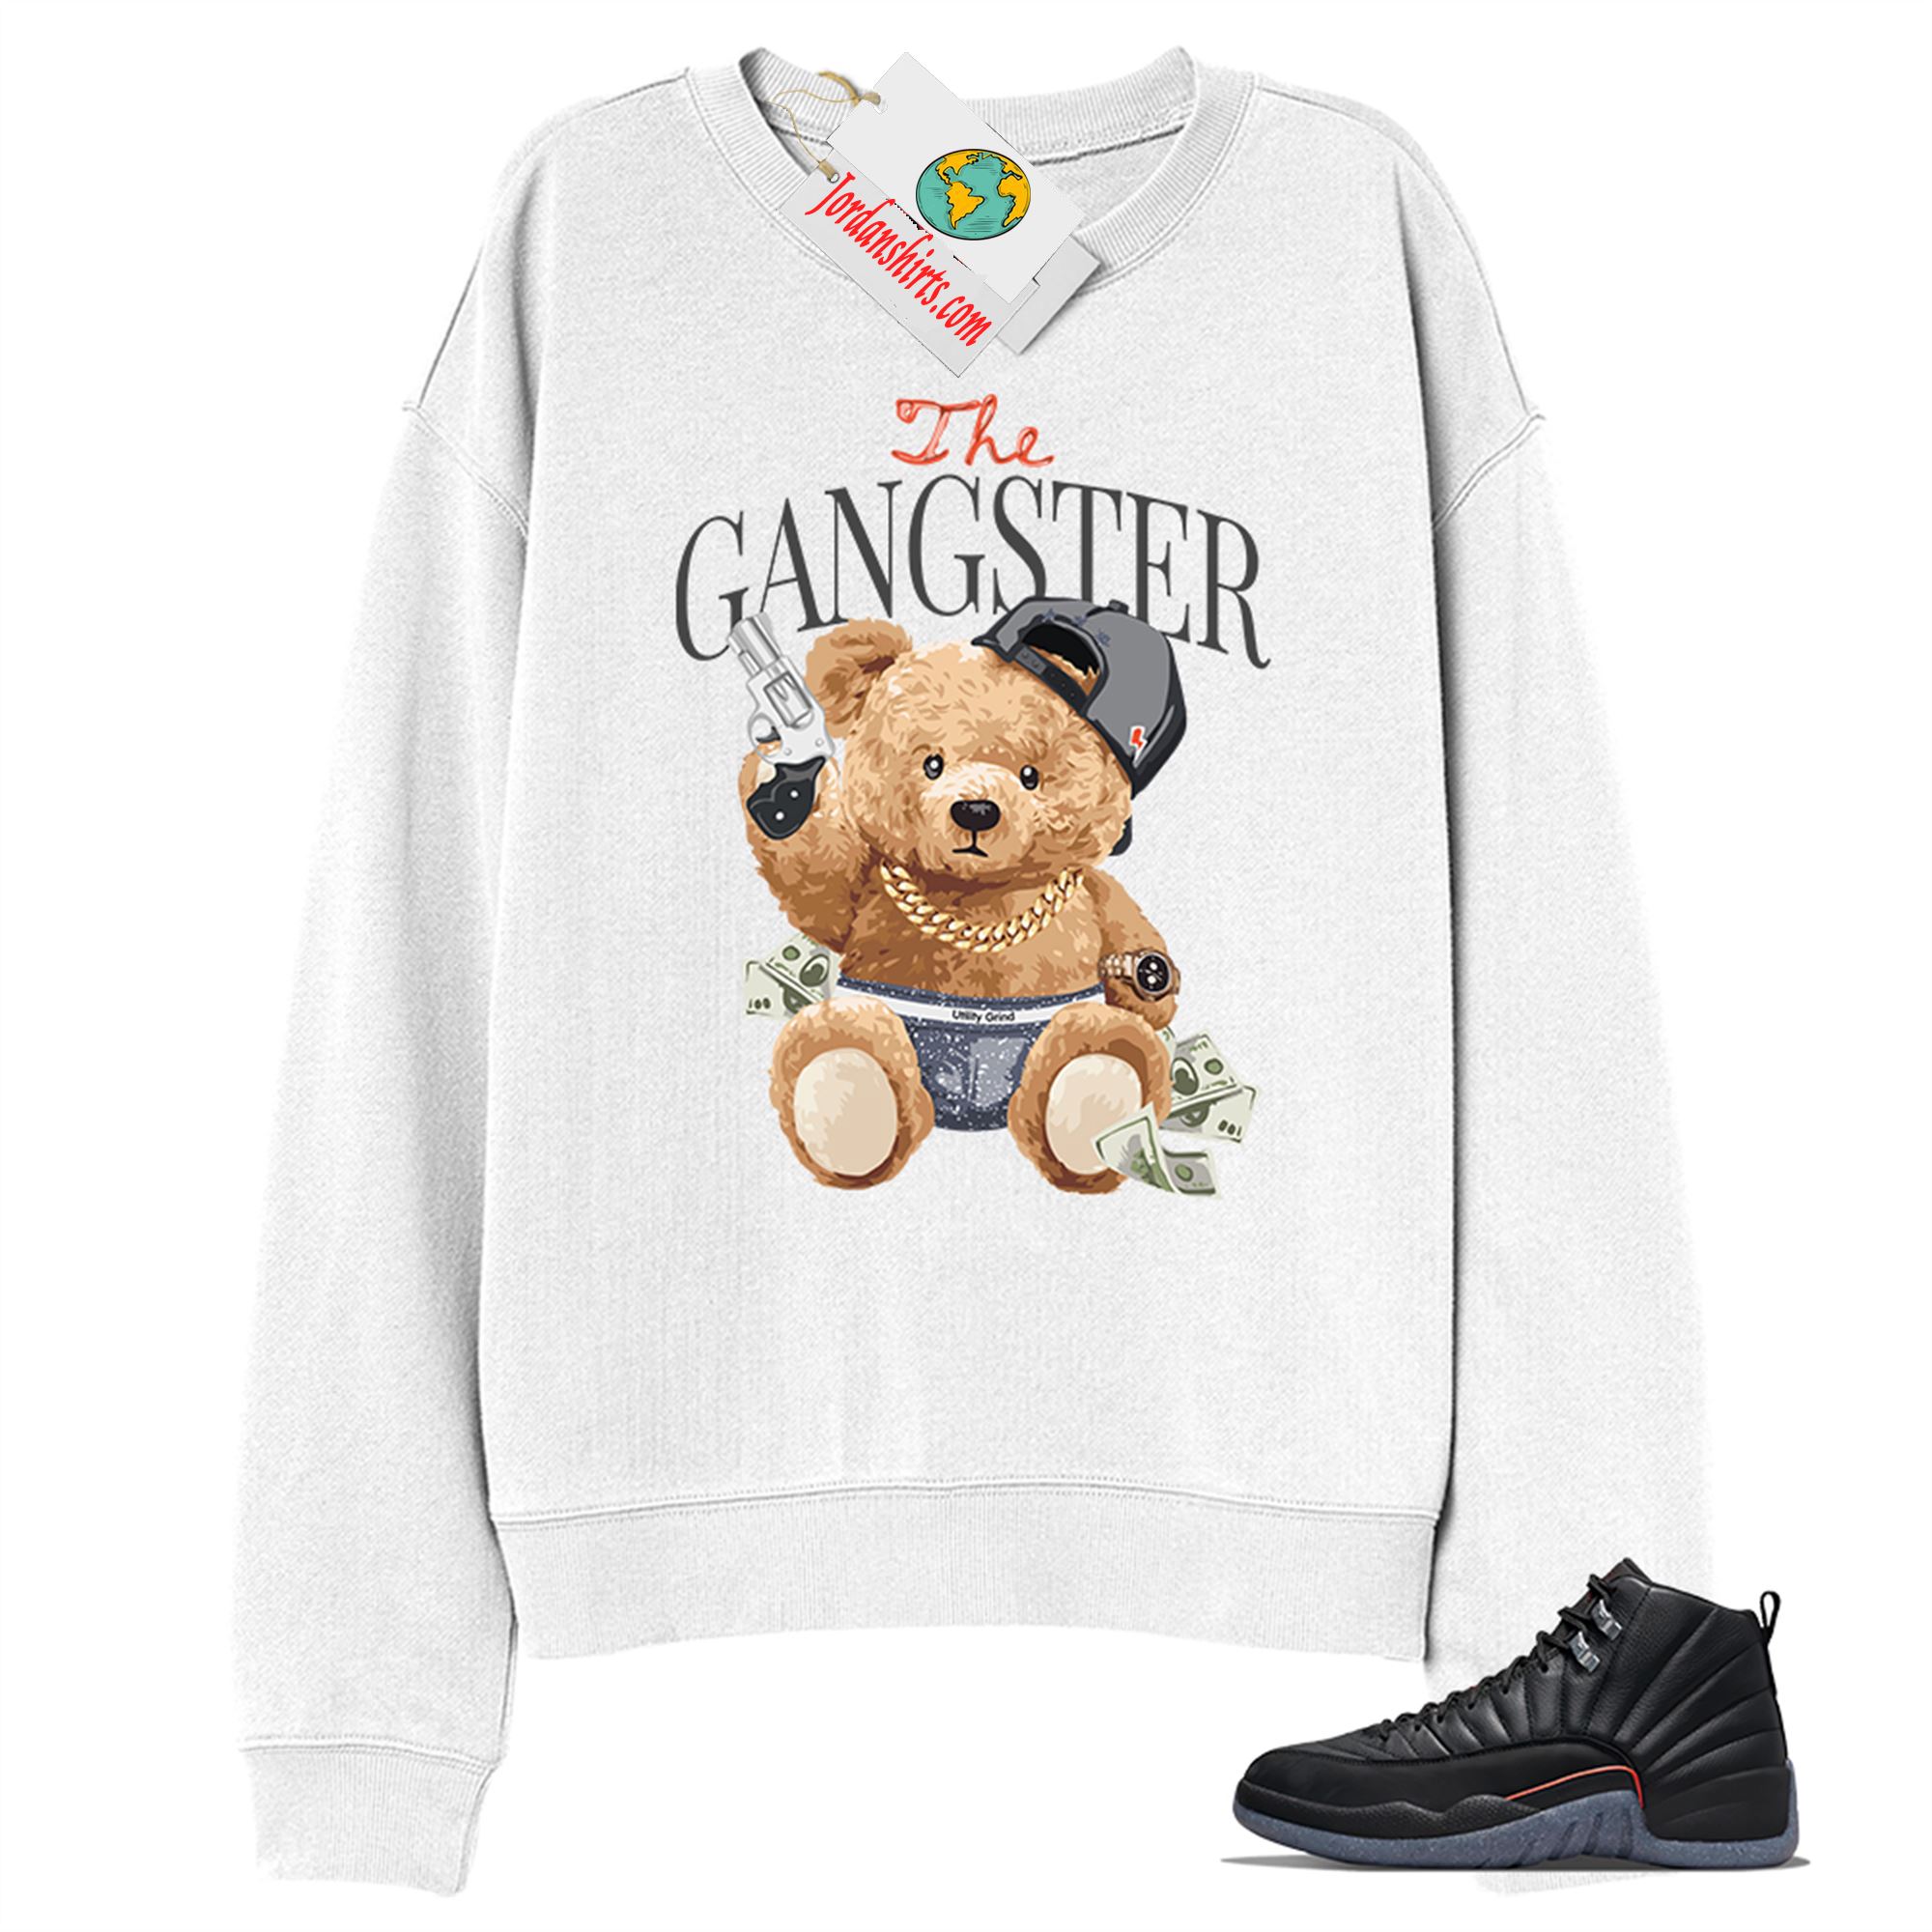 Jordan 12 Sweatshirt, Teddy Bear The Gangster White Sweatshirt Air Jordan 12 Utility Grind 12s Full Size Up To 5xl